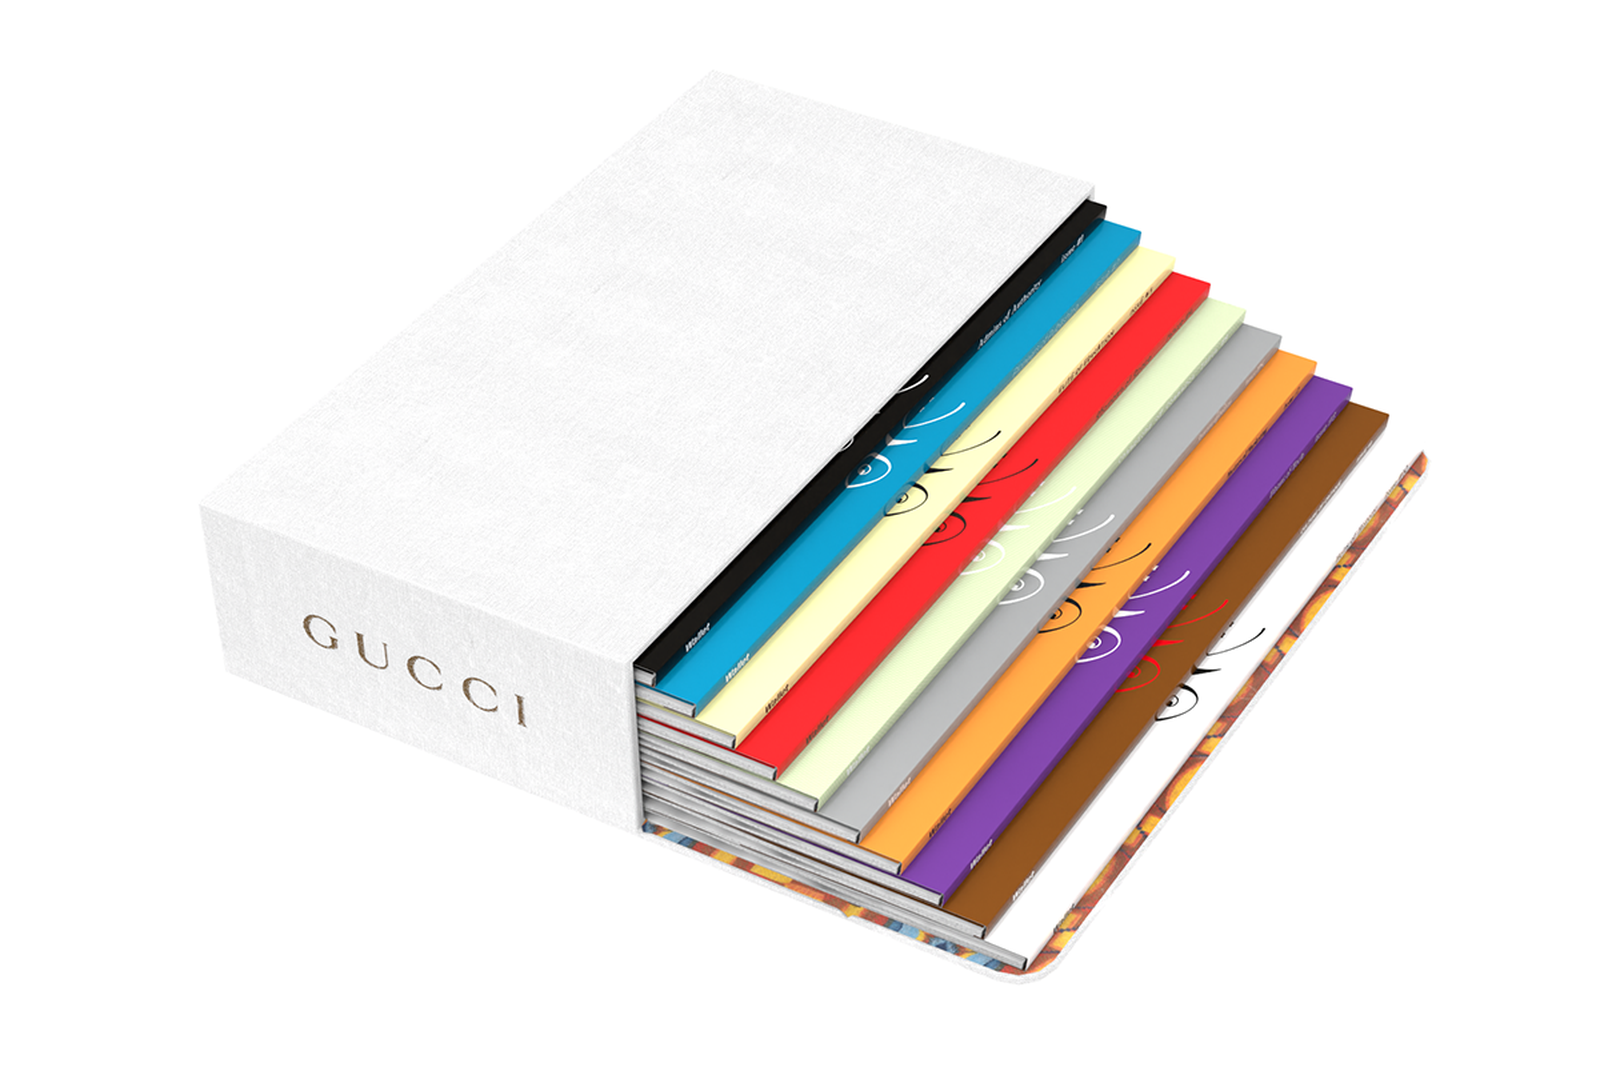 gucci-wallet-magazine-boxset-collection- (3)